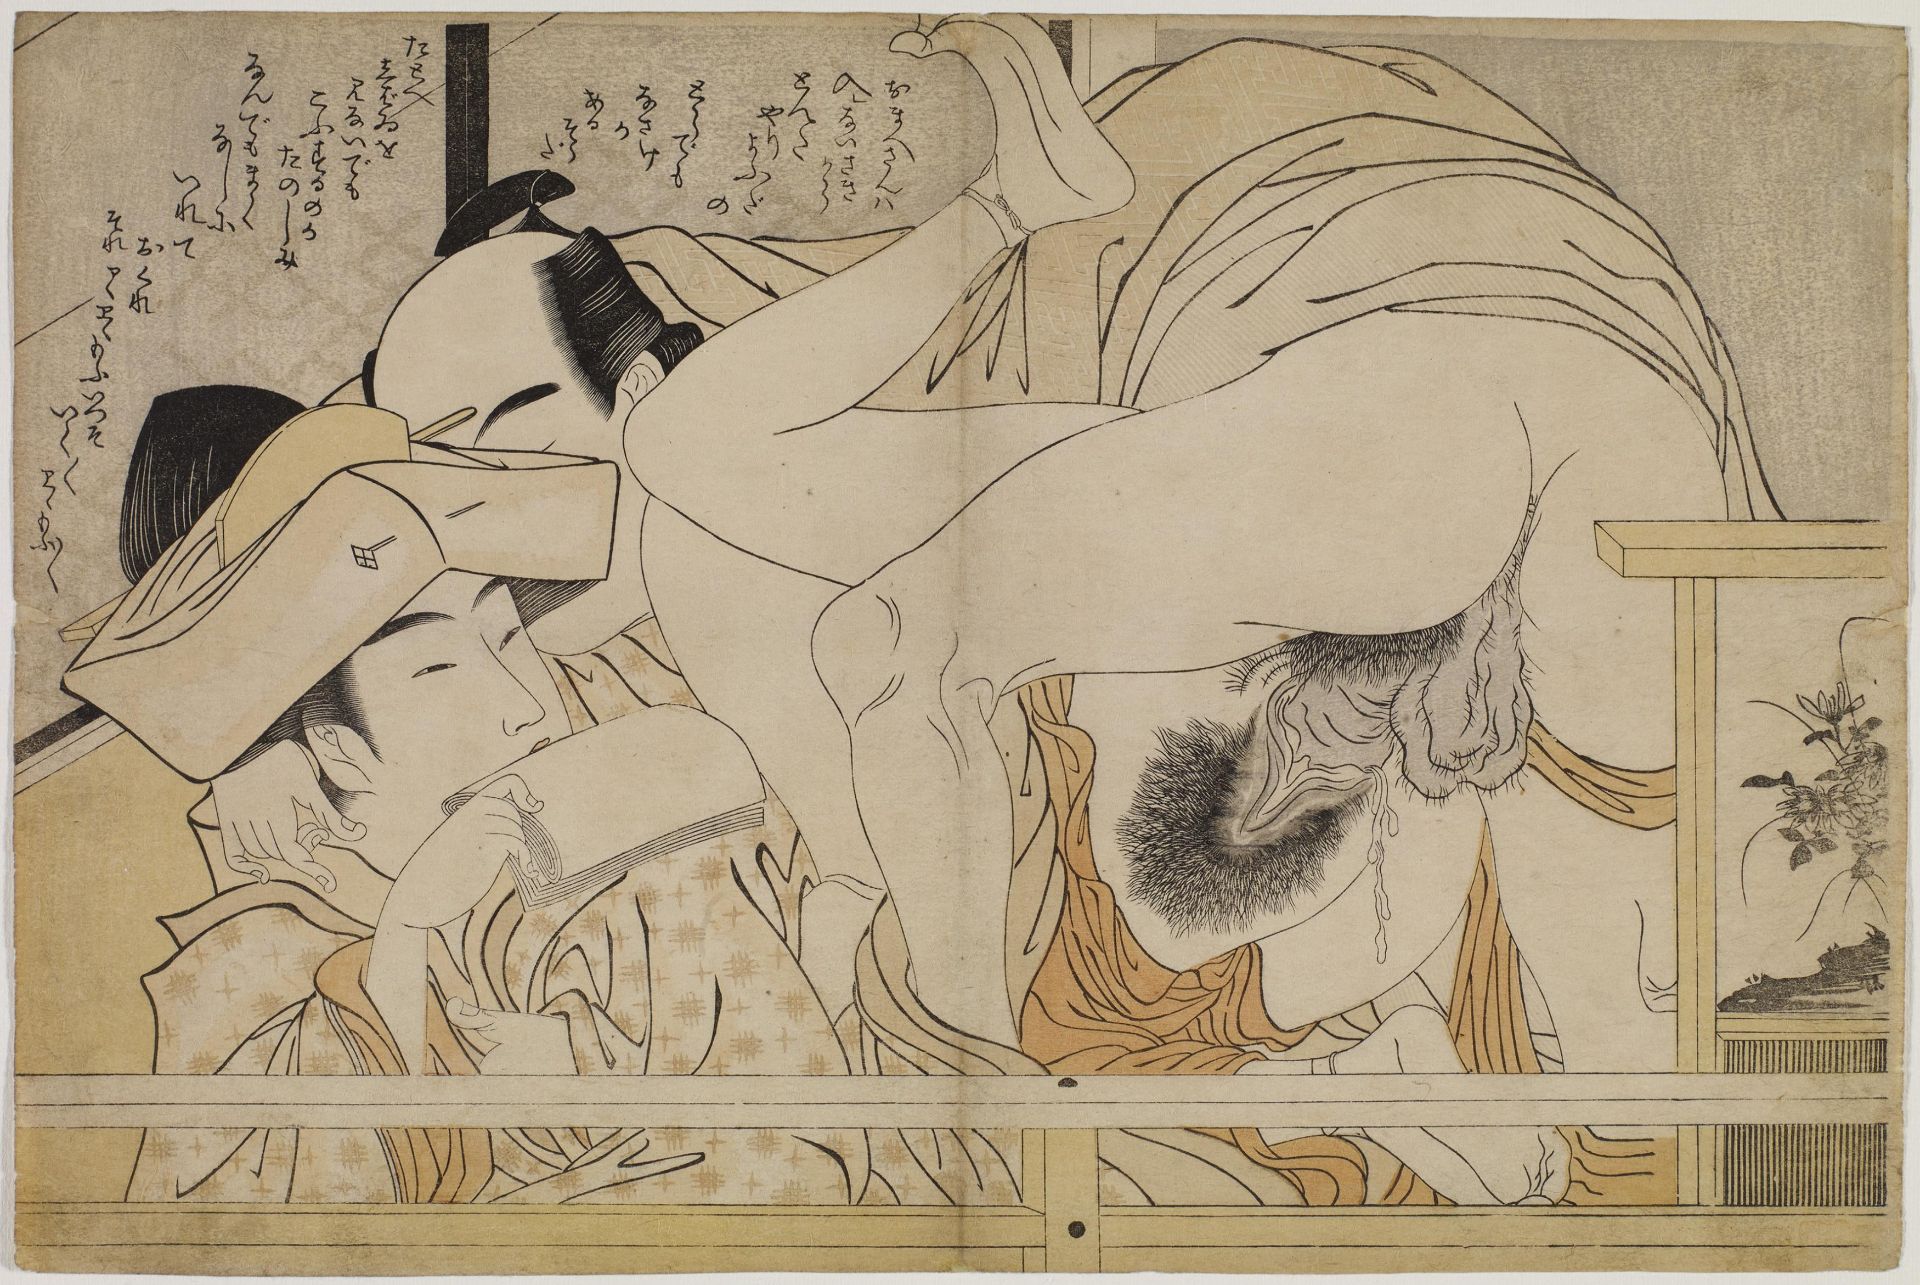 13 Blätter der Shunga-Serie "Fumi no kiyogaki" - Image 12 of 27